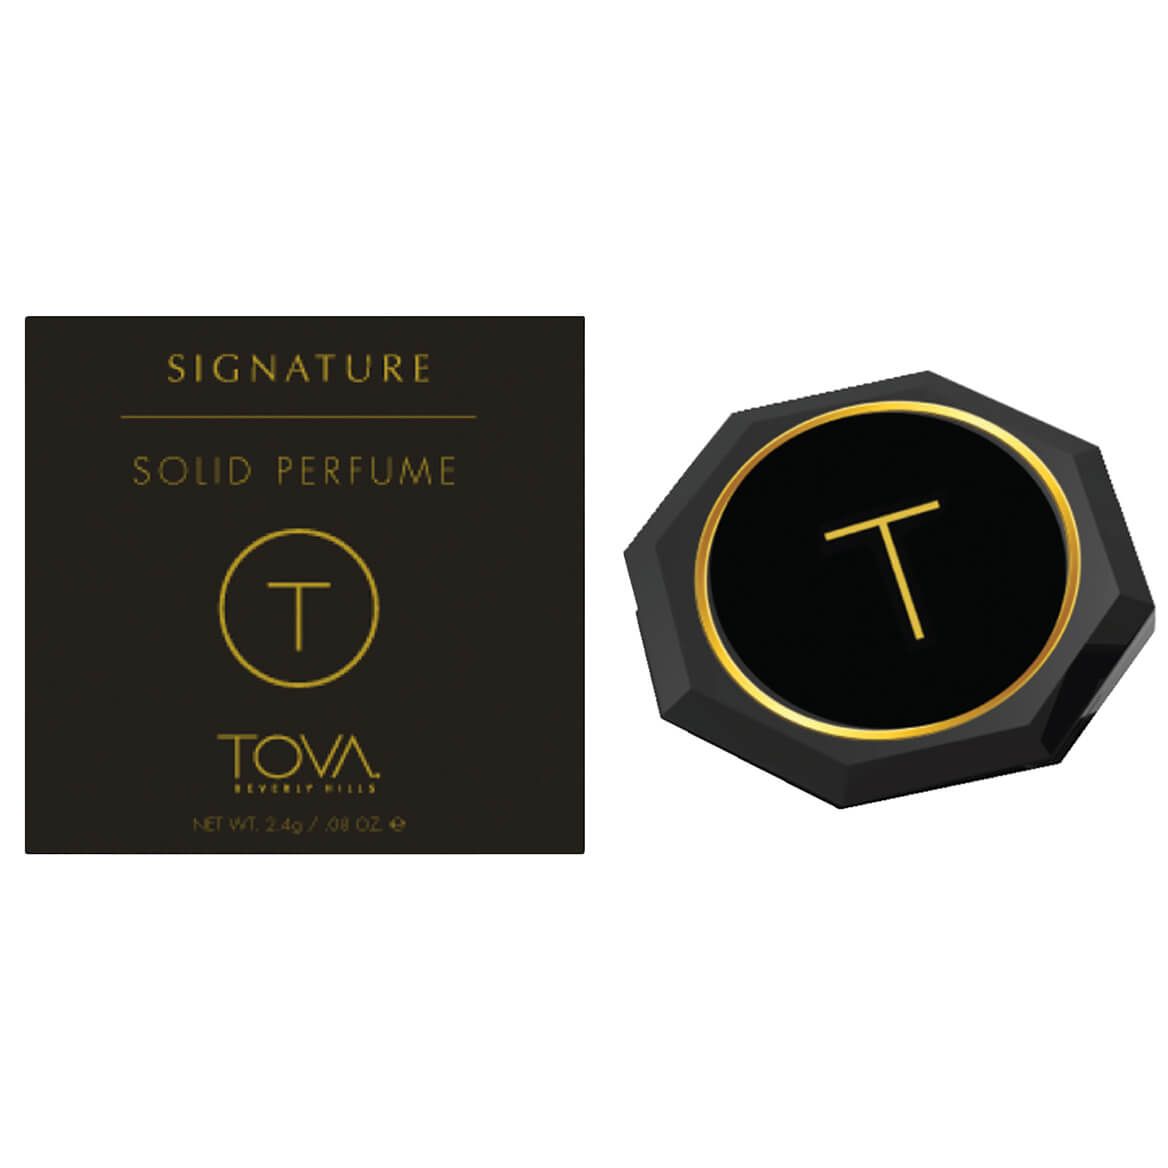 Tova Signature Solid Perfume for Women Compact, 2.4 g + '-' + 377315